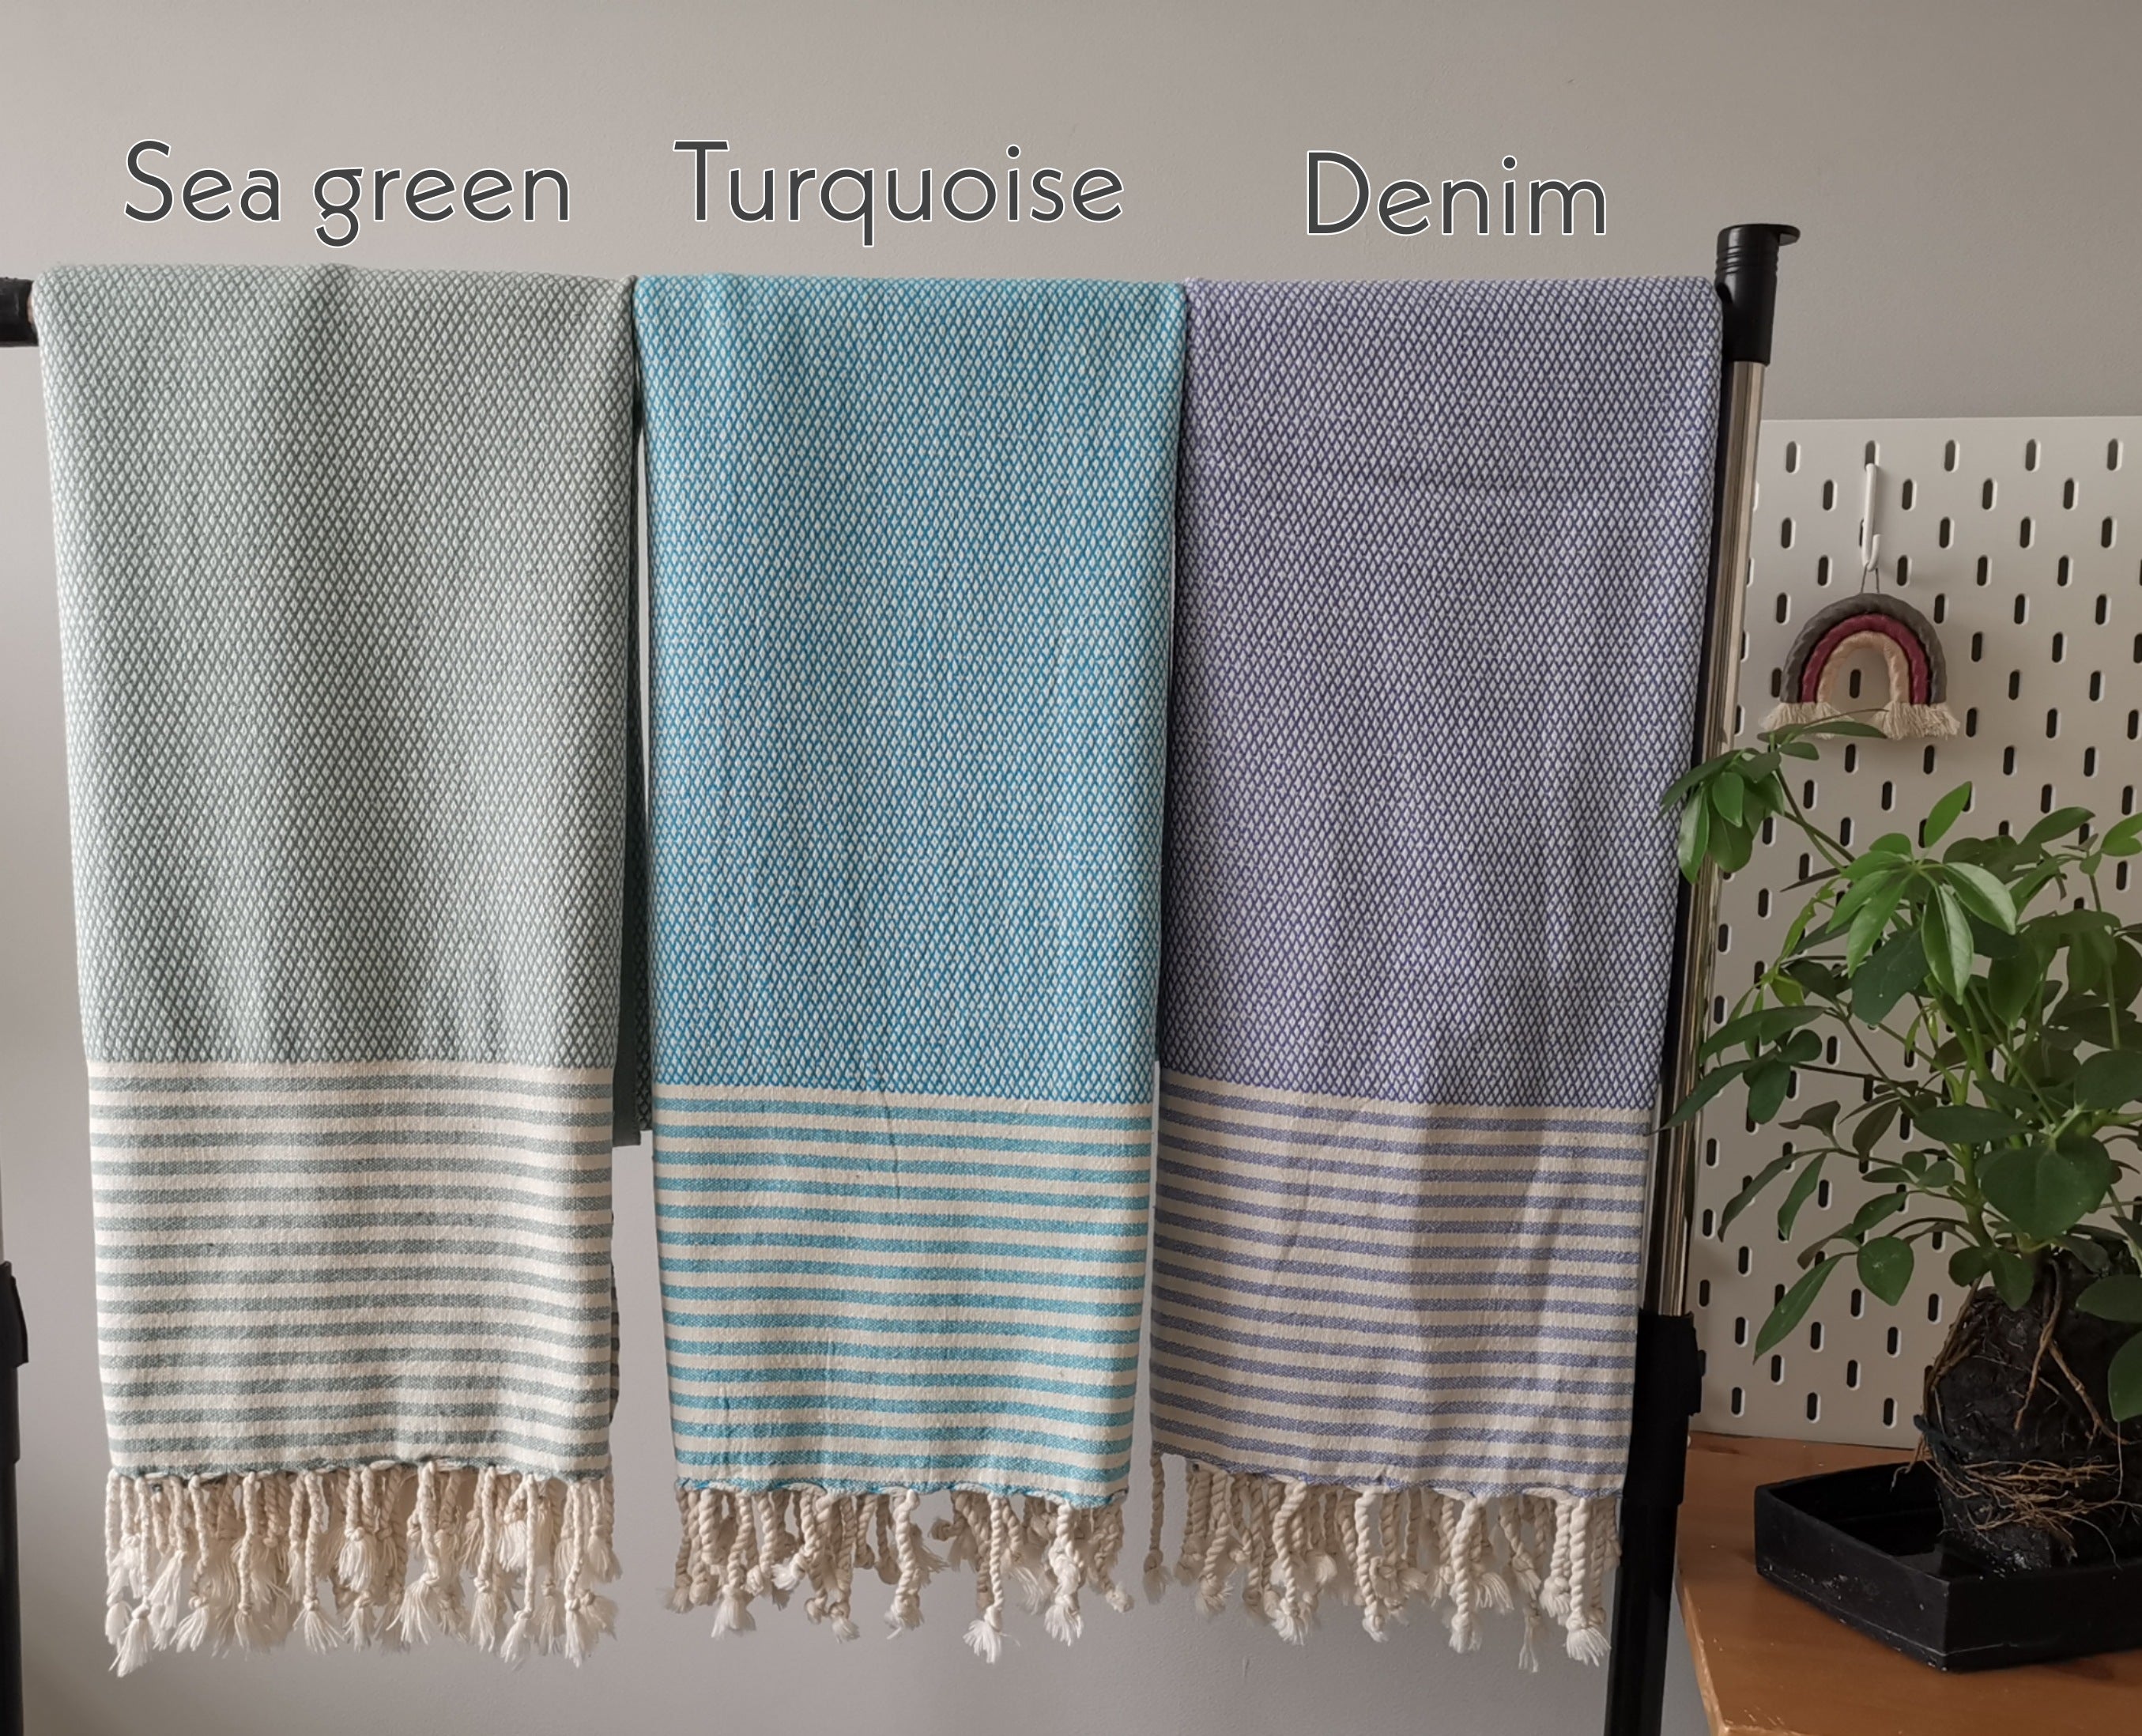 SOFT TURKISH TOWEL, Eco Friendly Towels, Cotton Turkish Towel, Sand Free  Towel, Gift for Friend, Beach Bath Towels Wedding Gift 